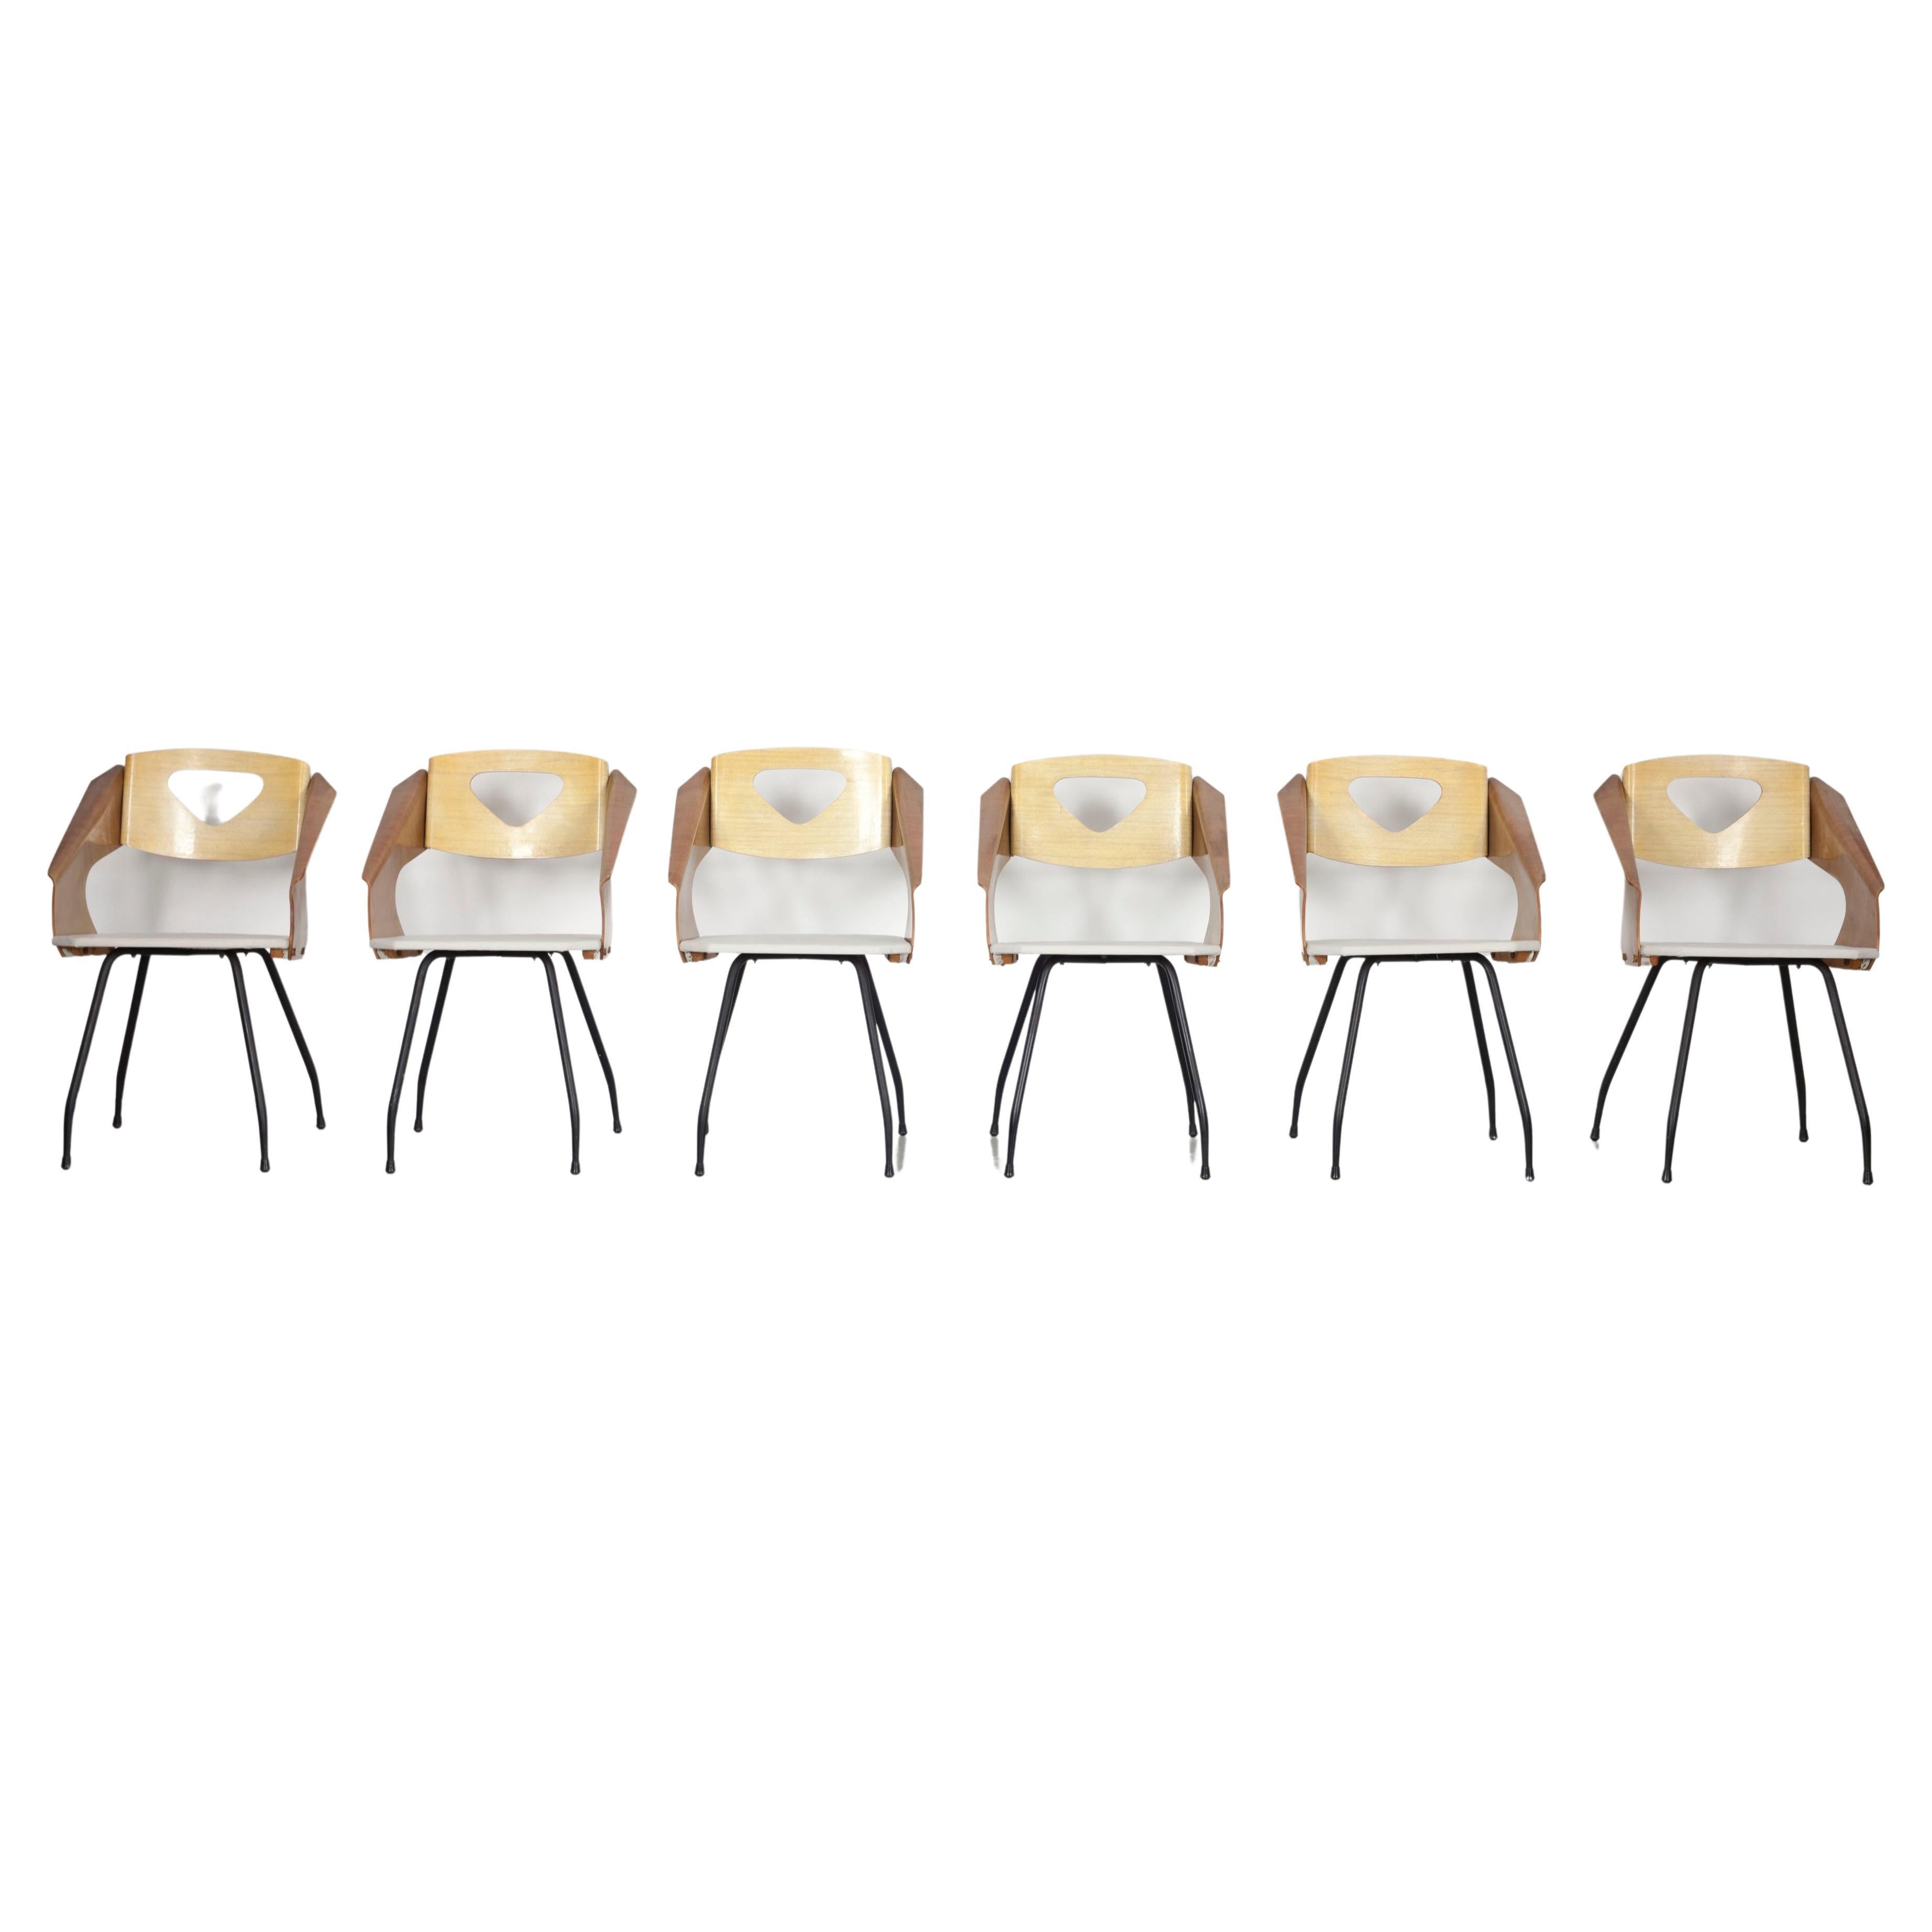 Set of 6 plywood chairs, 1950s, Carlo Ratti, Italy, Industria Legni Curvati